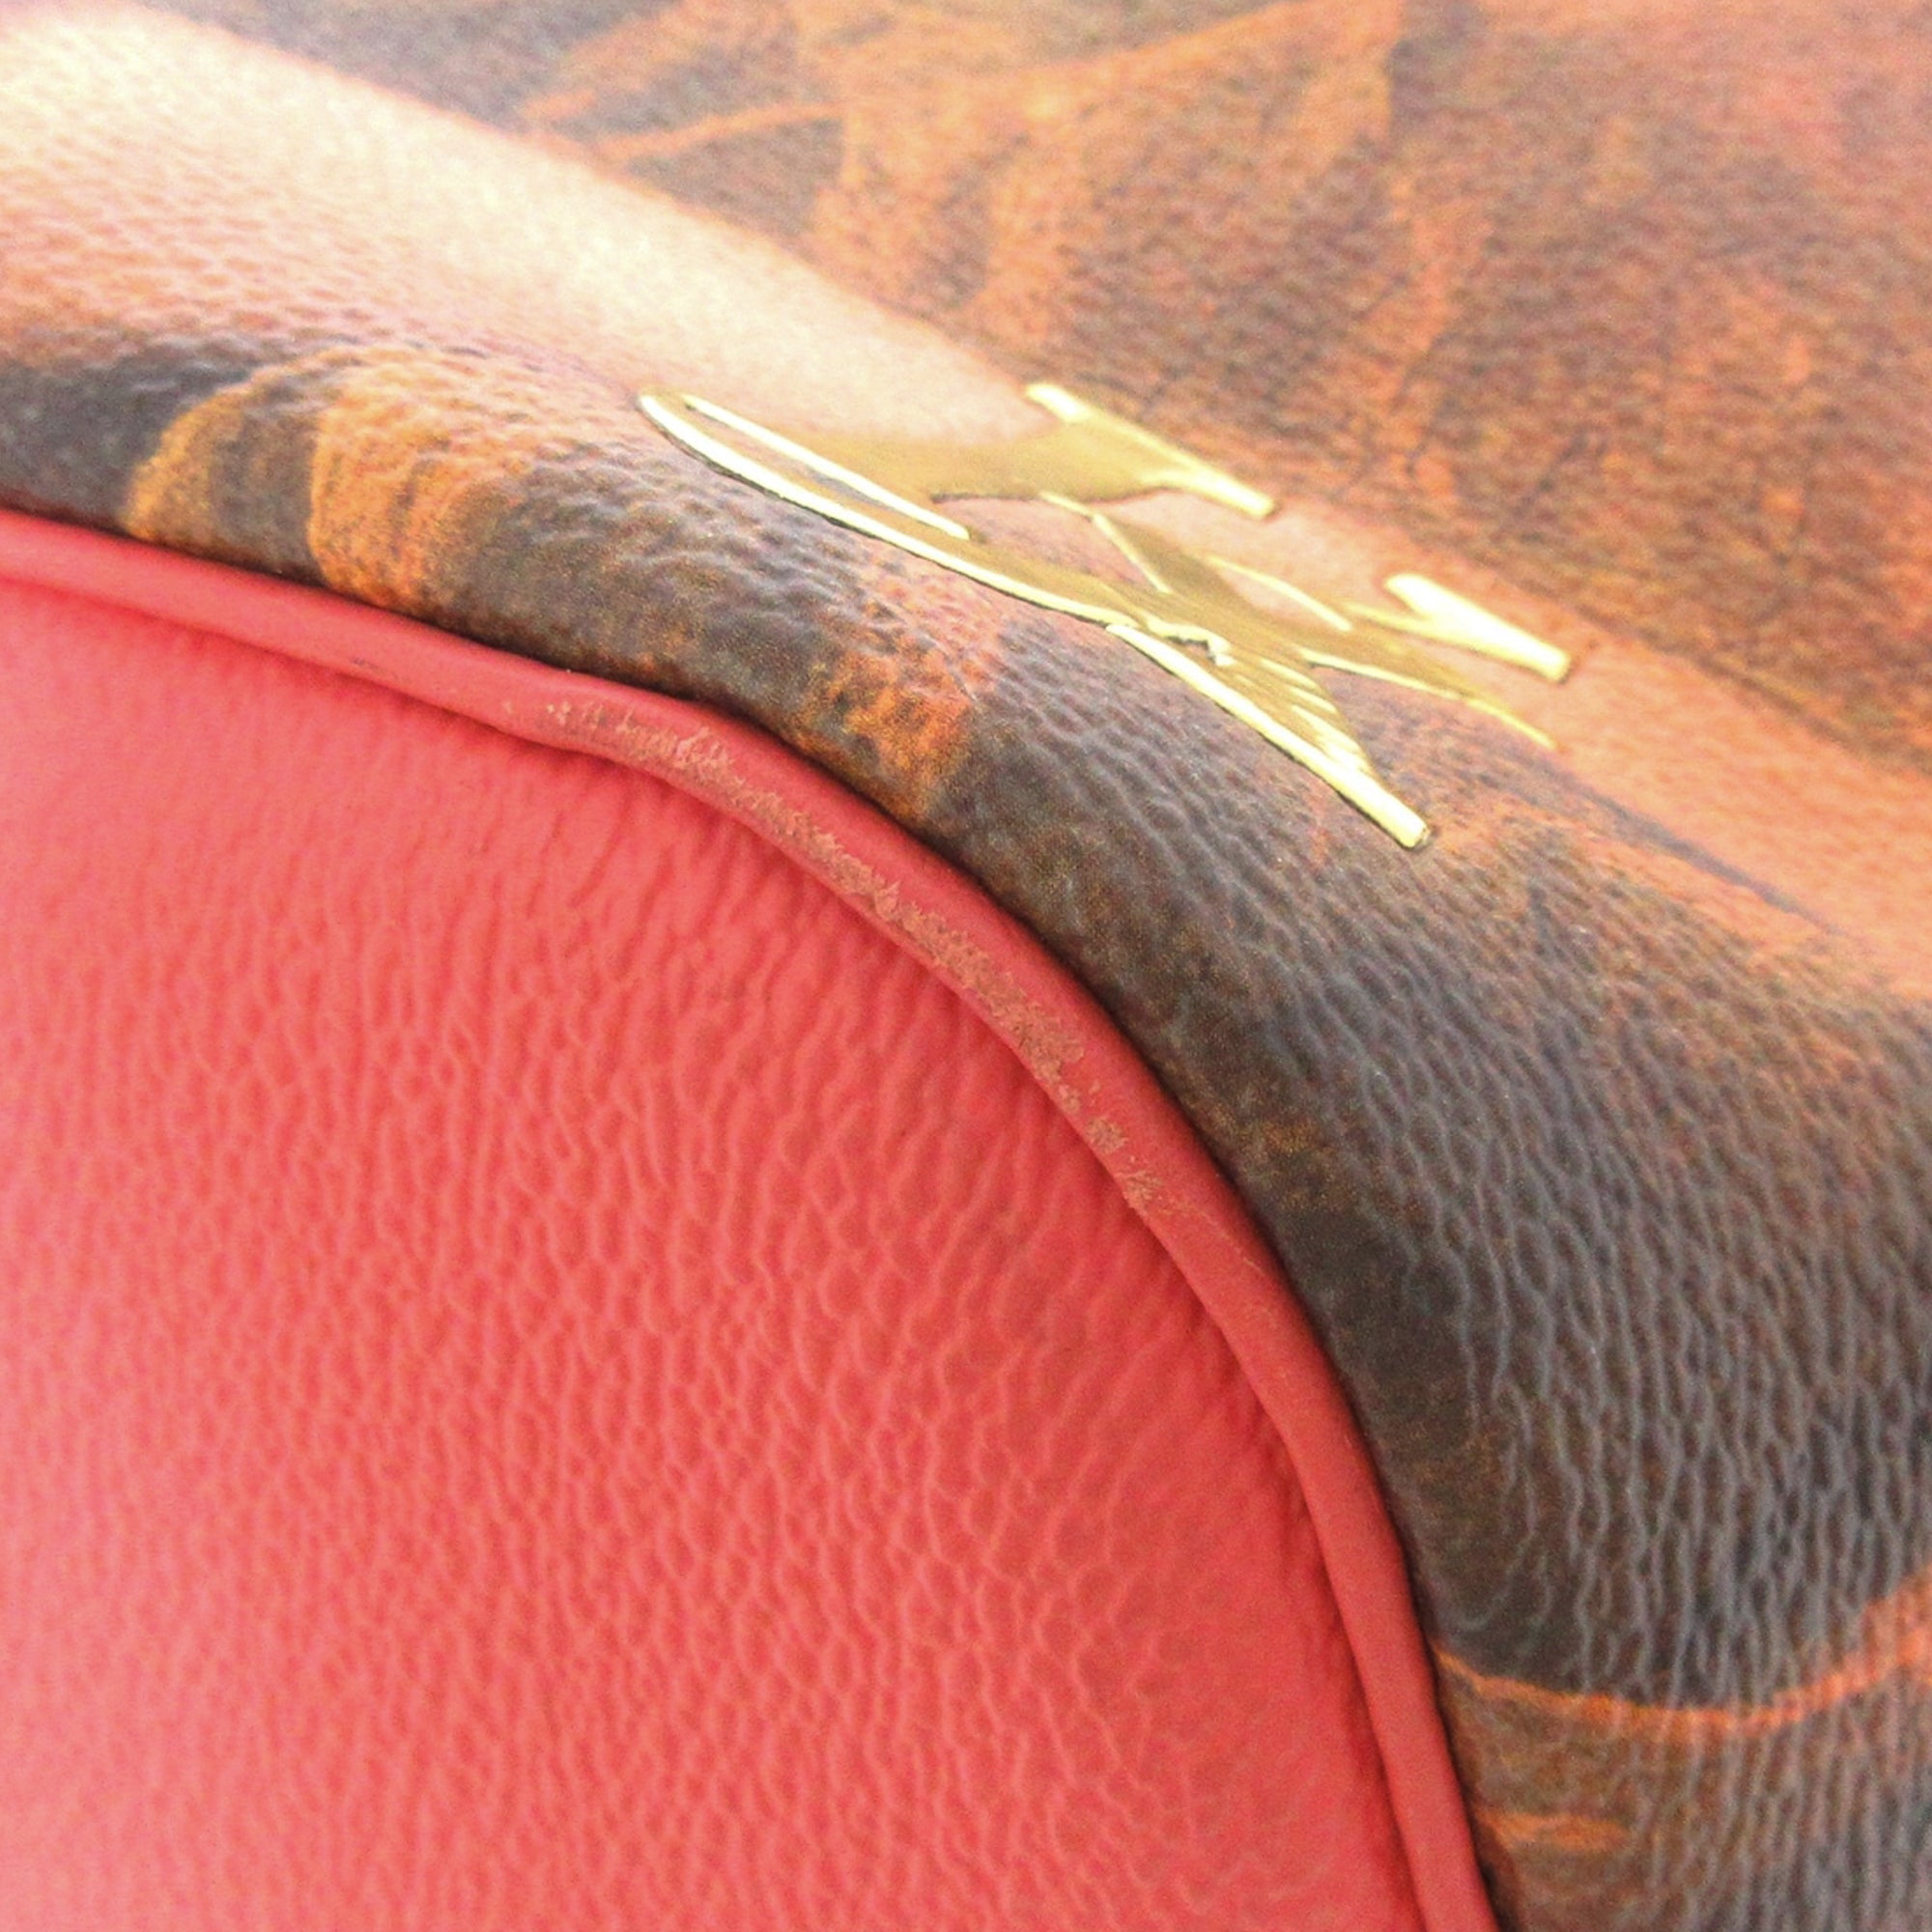 Louis Vuitton Limited Edition Coated Canvas Jeff Koons Fragonard Neverfull  MM Bag - Yoogi's Closet